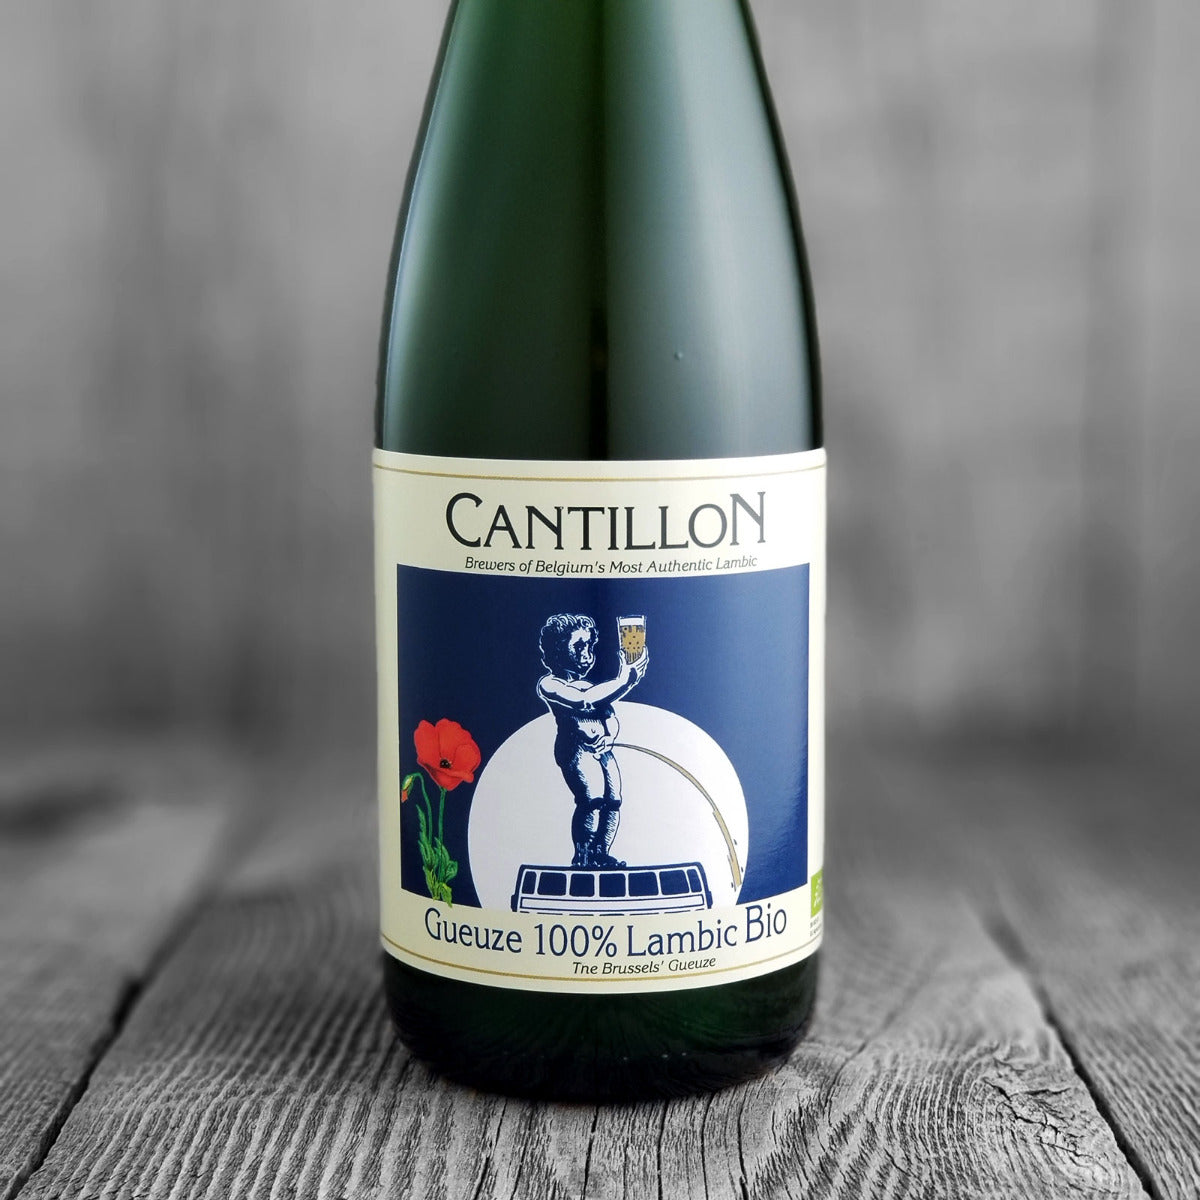 Cantillon Gueuze 100 Lambic Bio (2017)